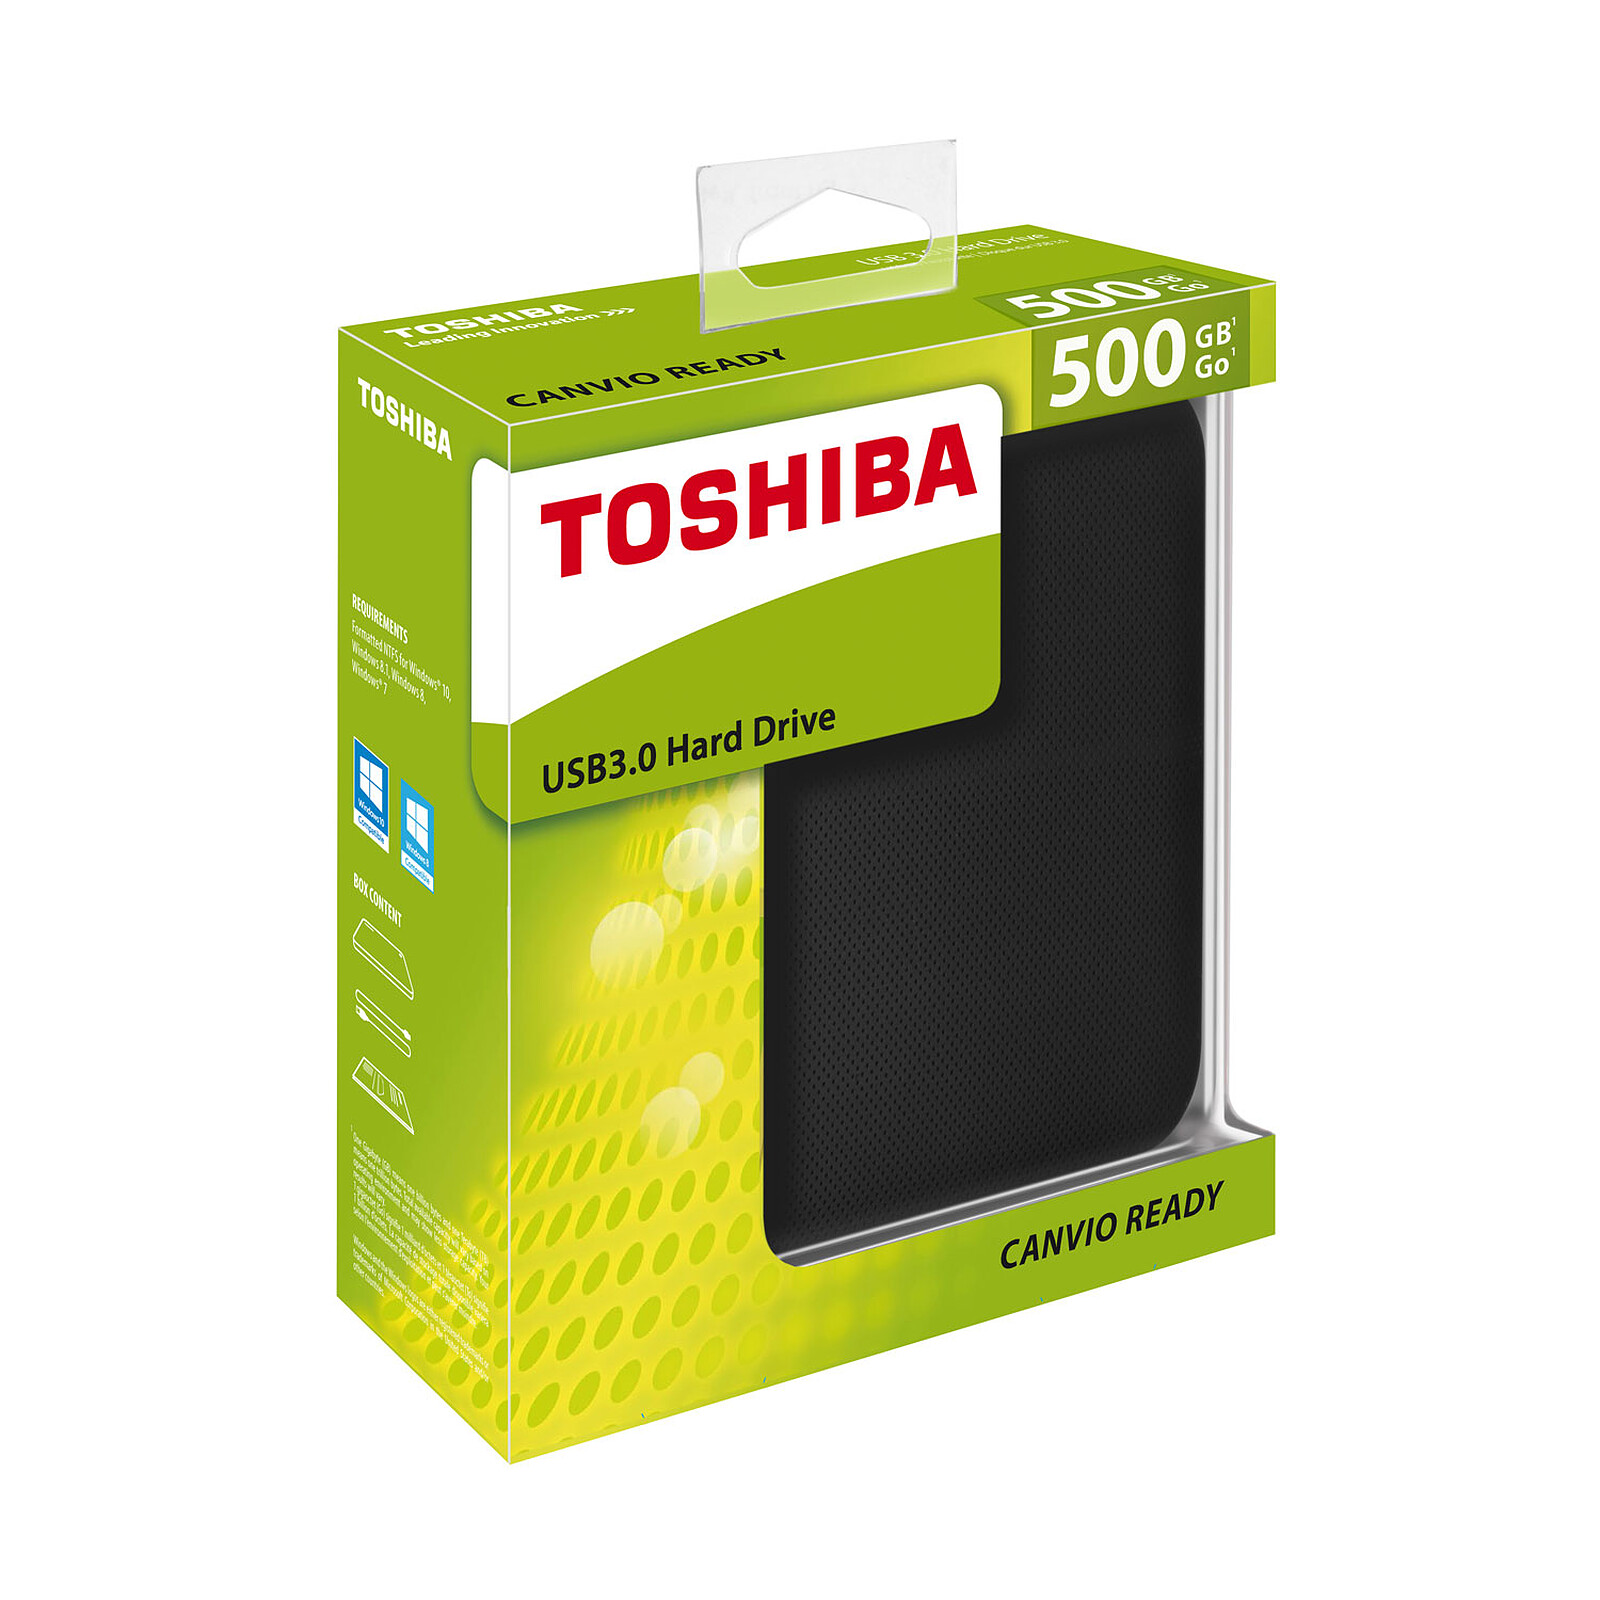 Toshiba Disque dur externe 2To canvio basics + housse pas cher 